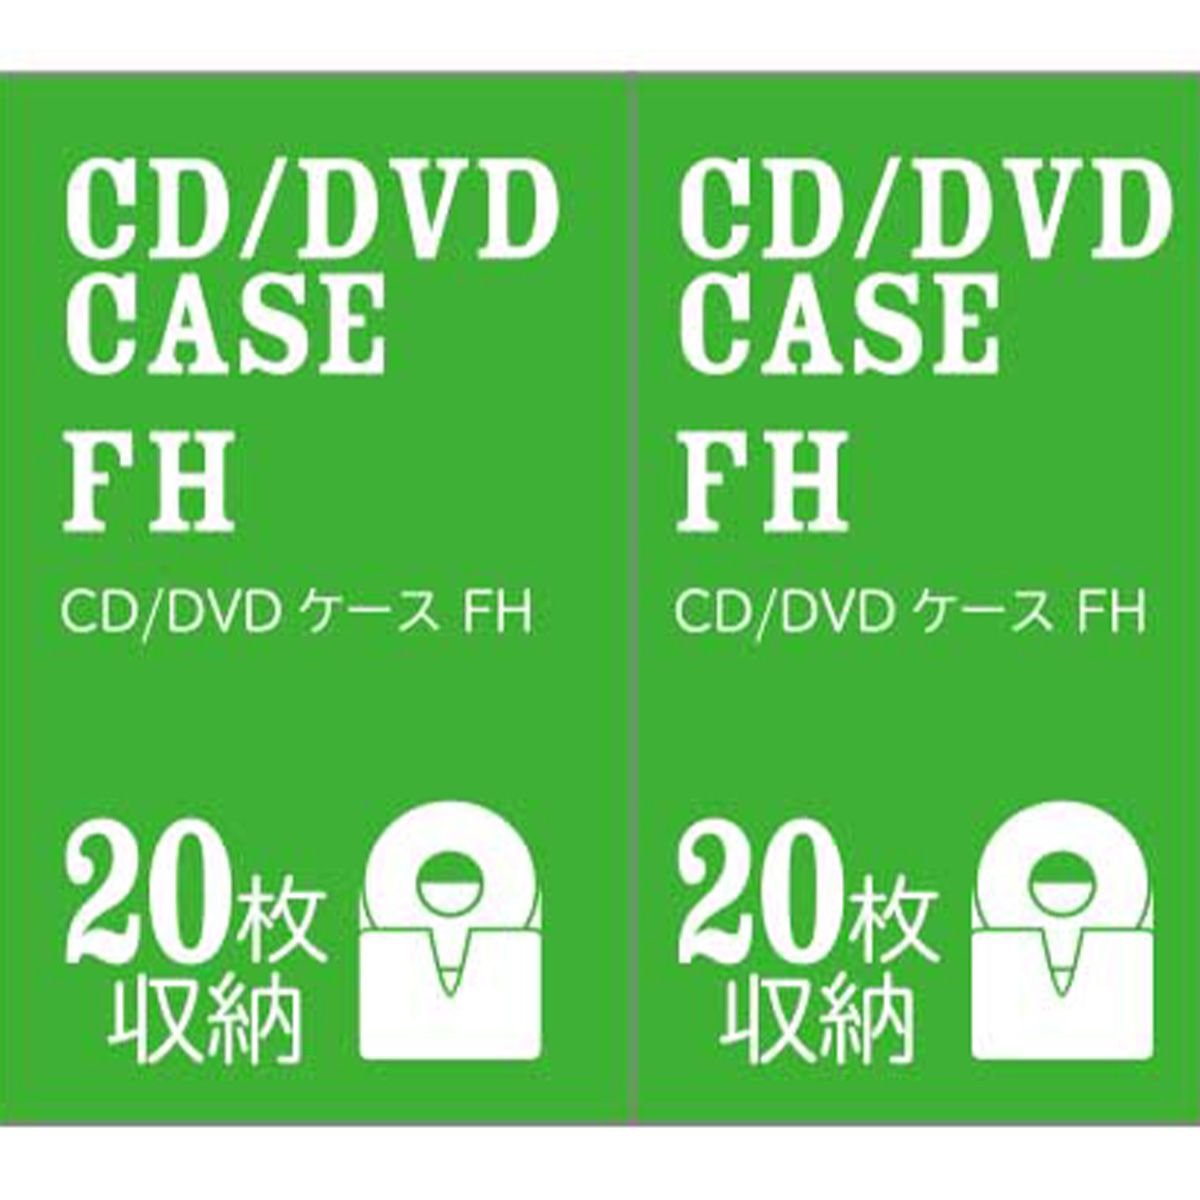 CD/DVD ケース FH 0344/358269